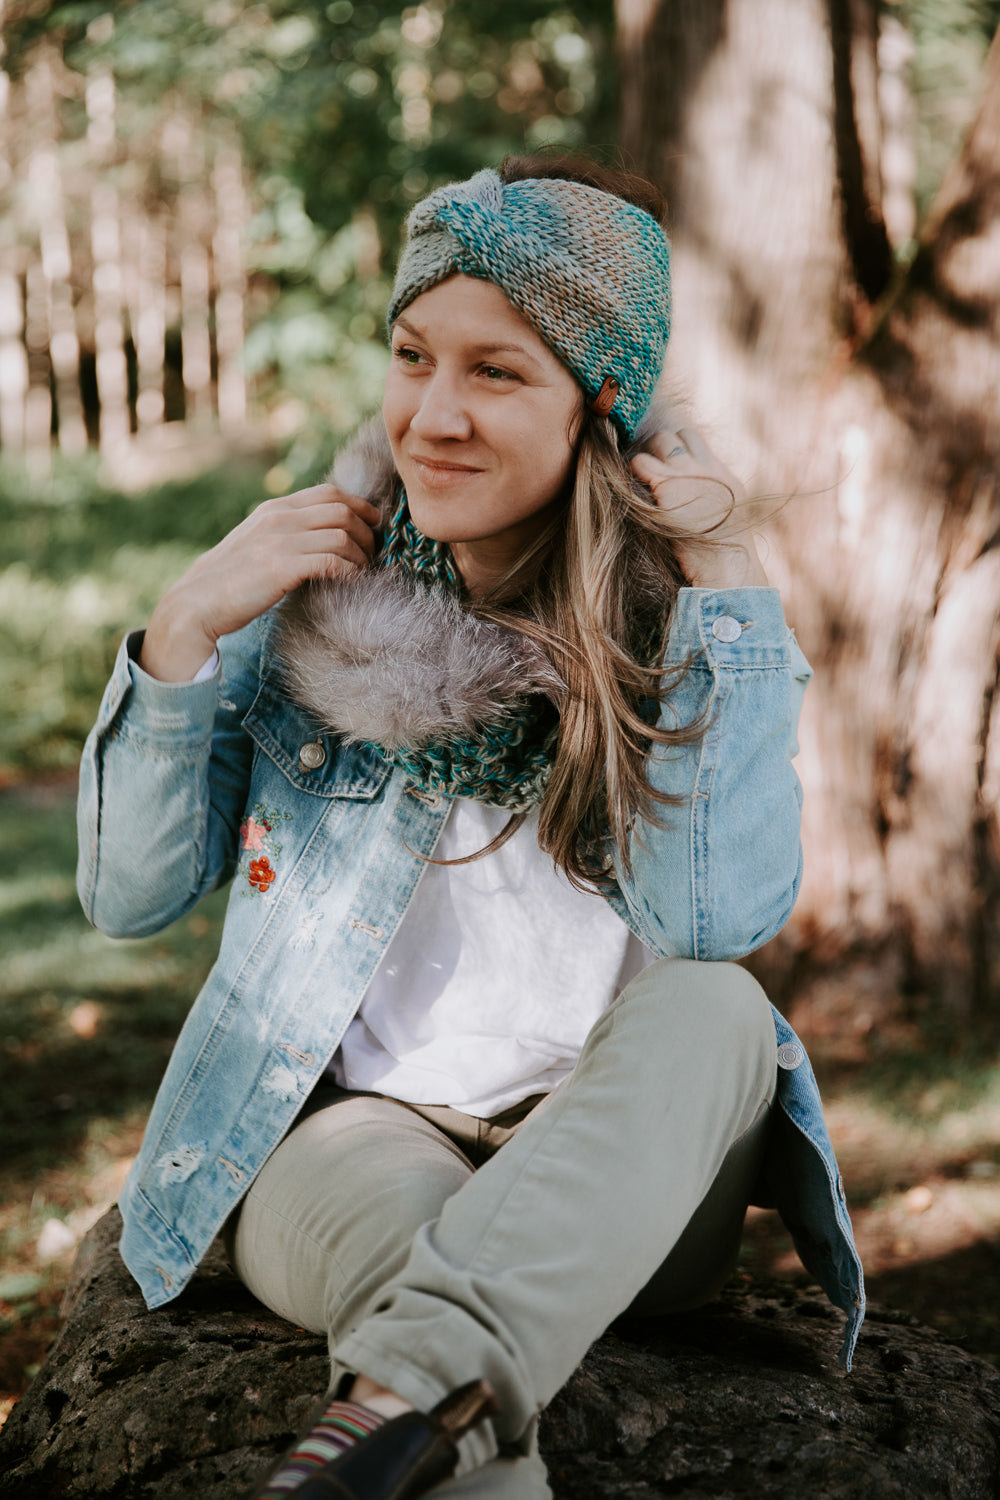 Turquoise twist headband in wool knit for women - one size - handmade